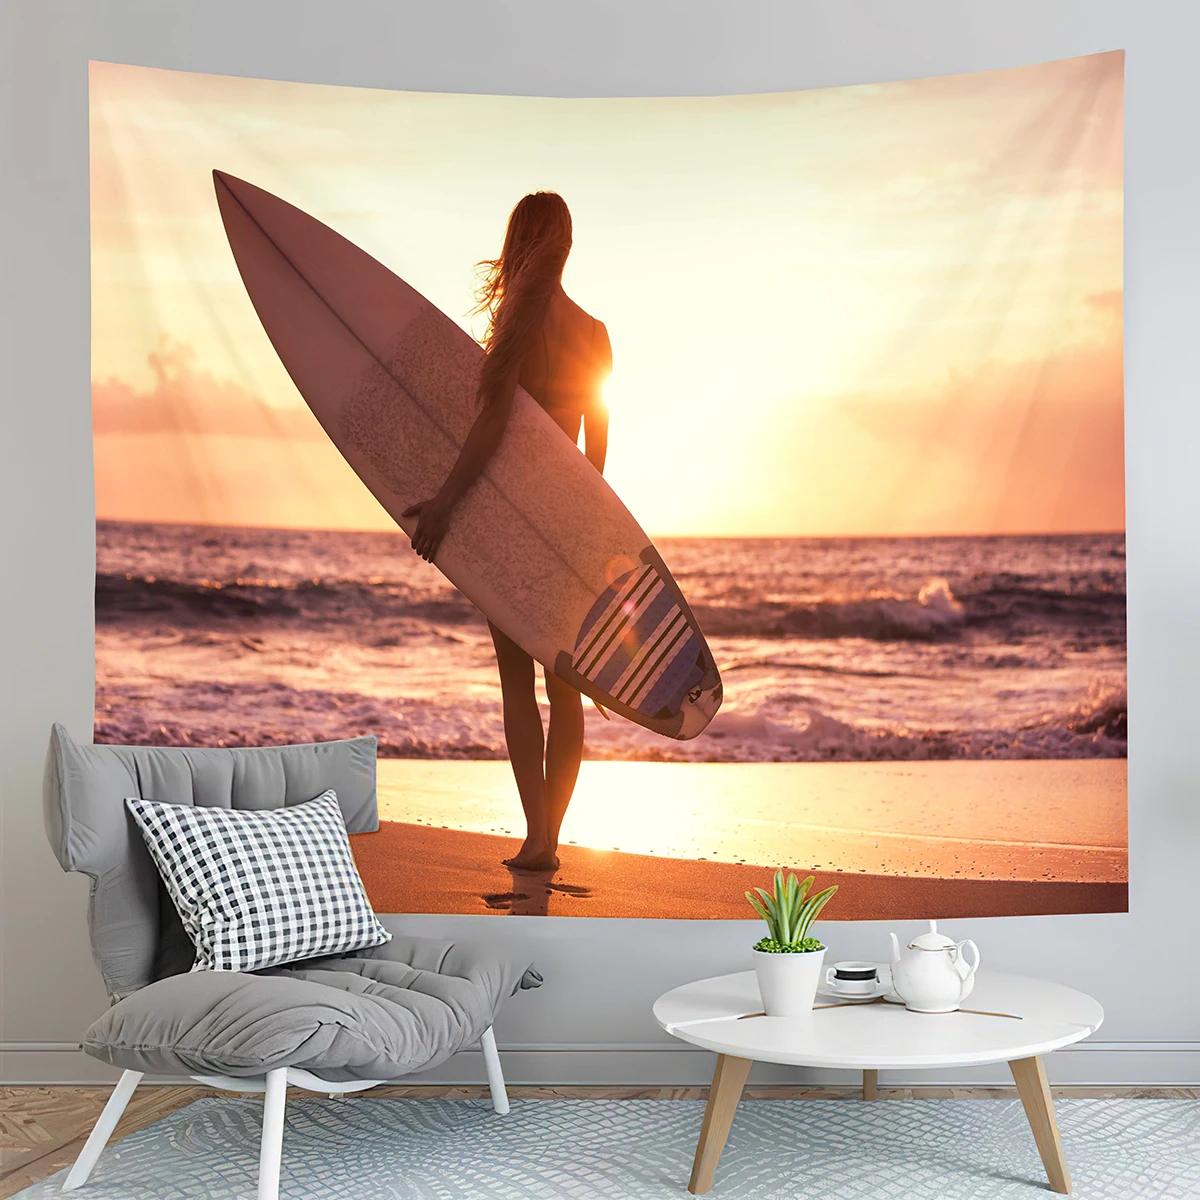 

Sunset Beach Tapestry Sea Surfing Surfer Girl Tapestry Sunset Seascape Tapestry Art Home Living Room Bedroom Decor Tapestries